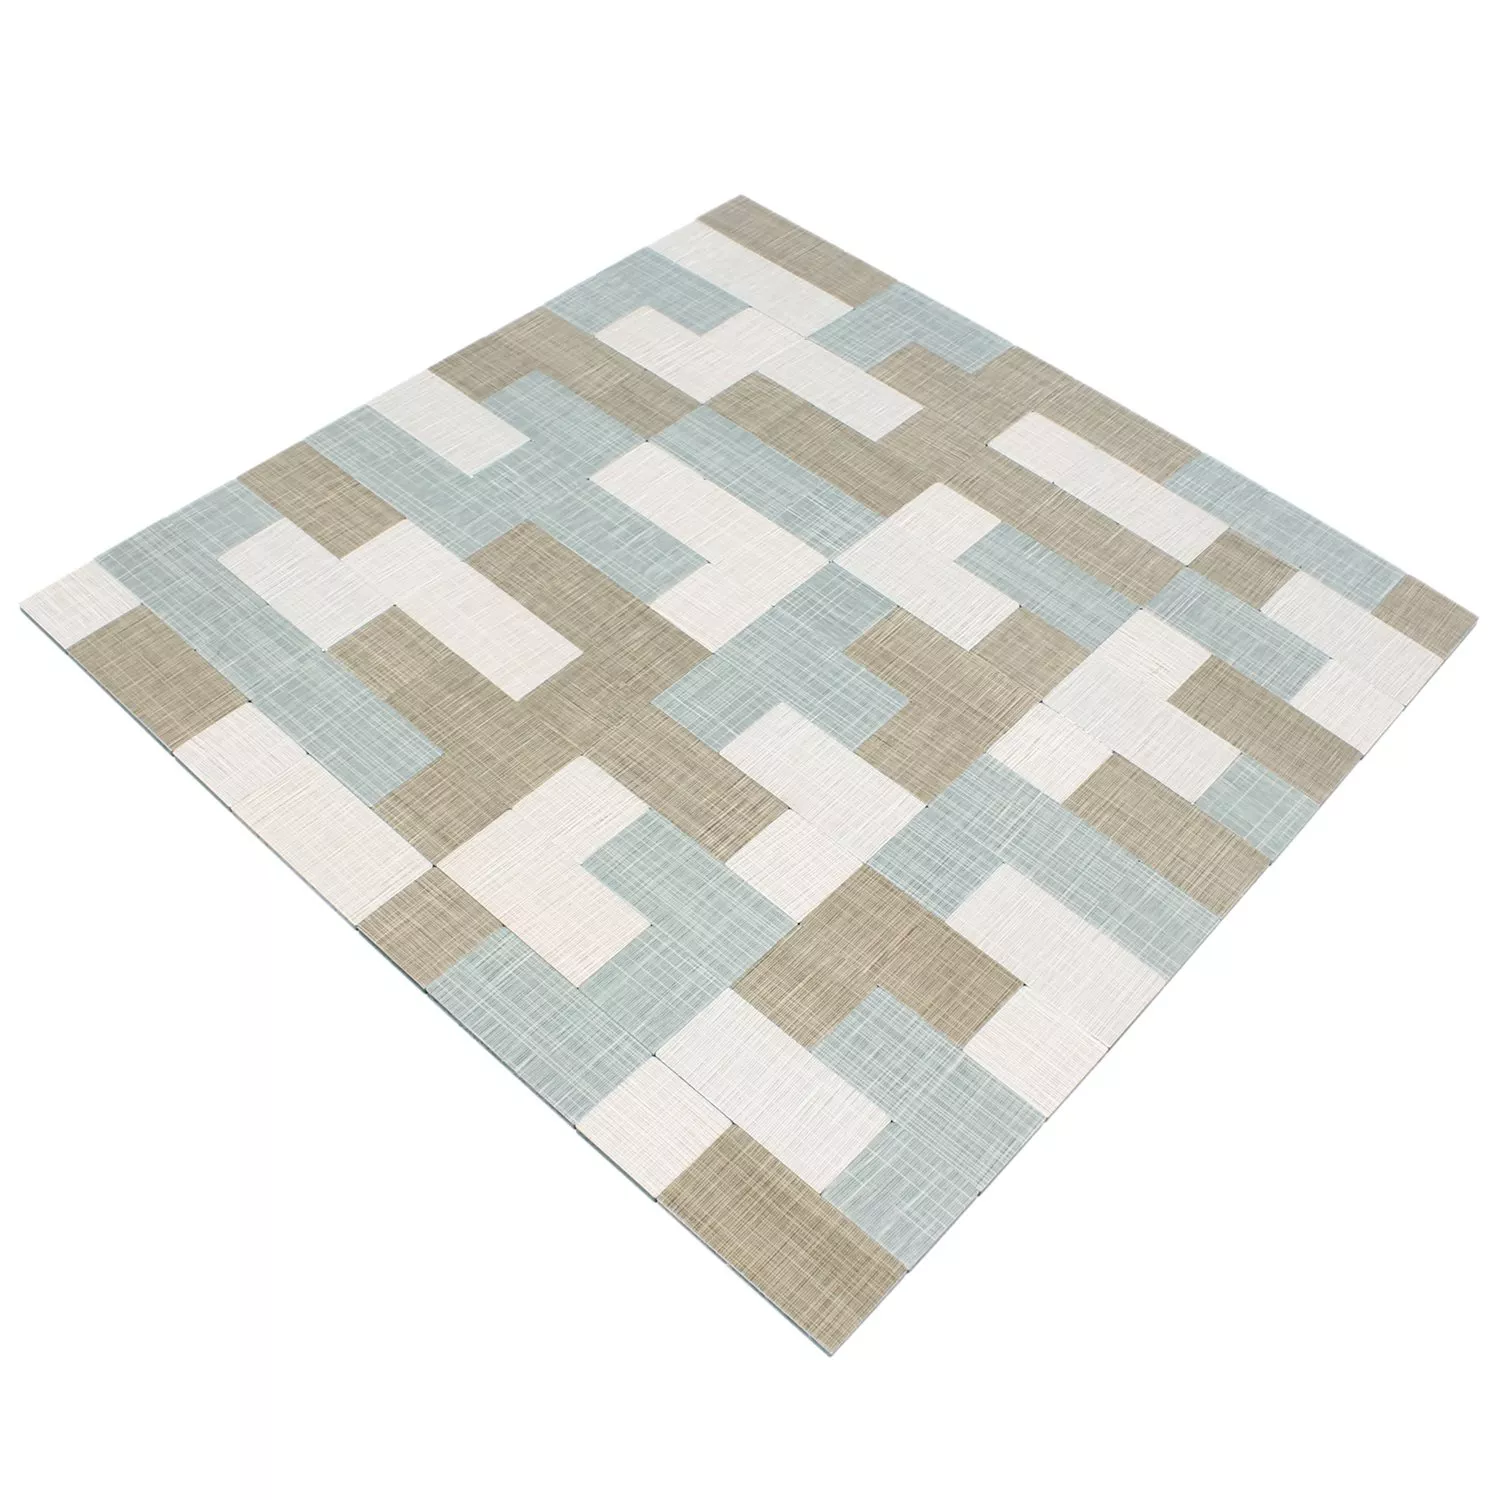 Sample Mosaic Tiles Textile Optic Metal Self Adhesive Taxco Kombi